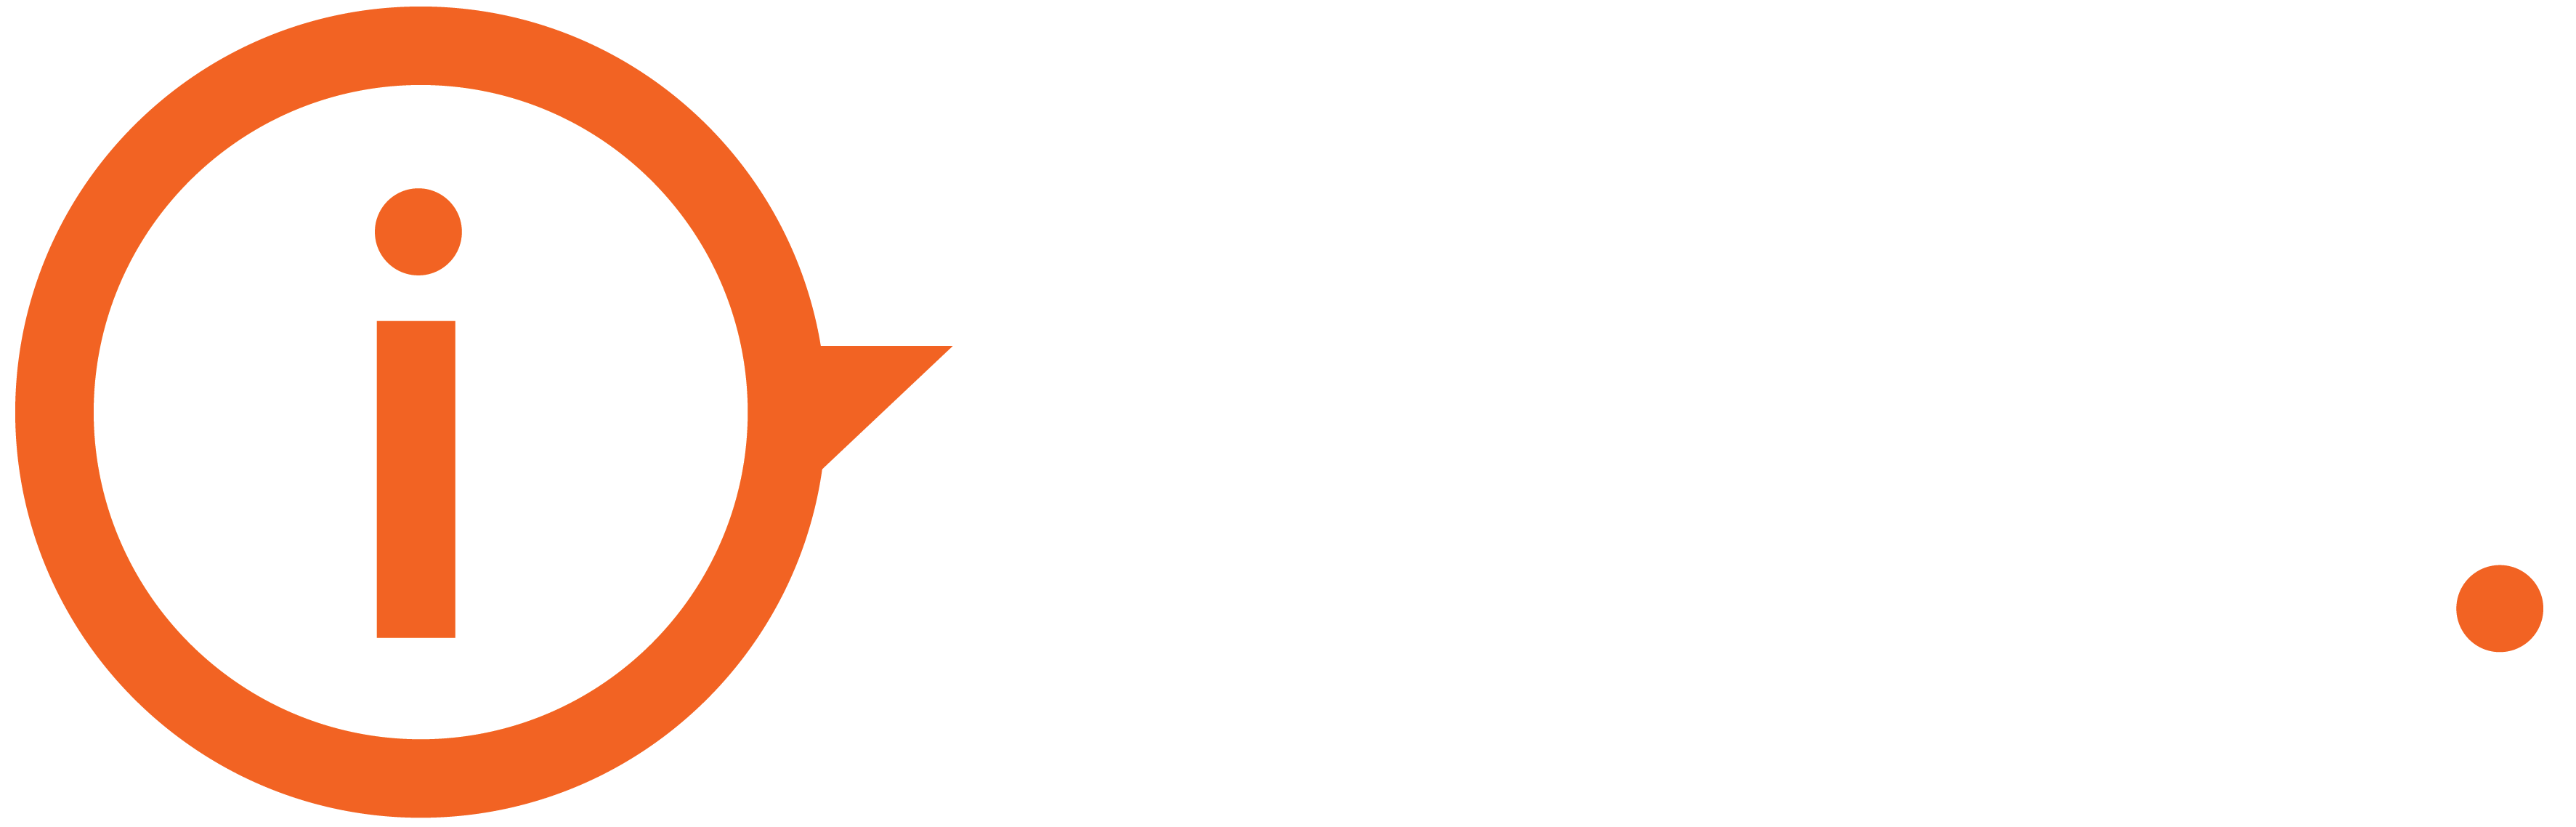 IDEAS logo.